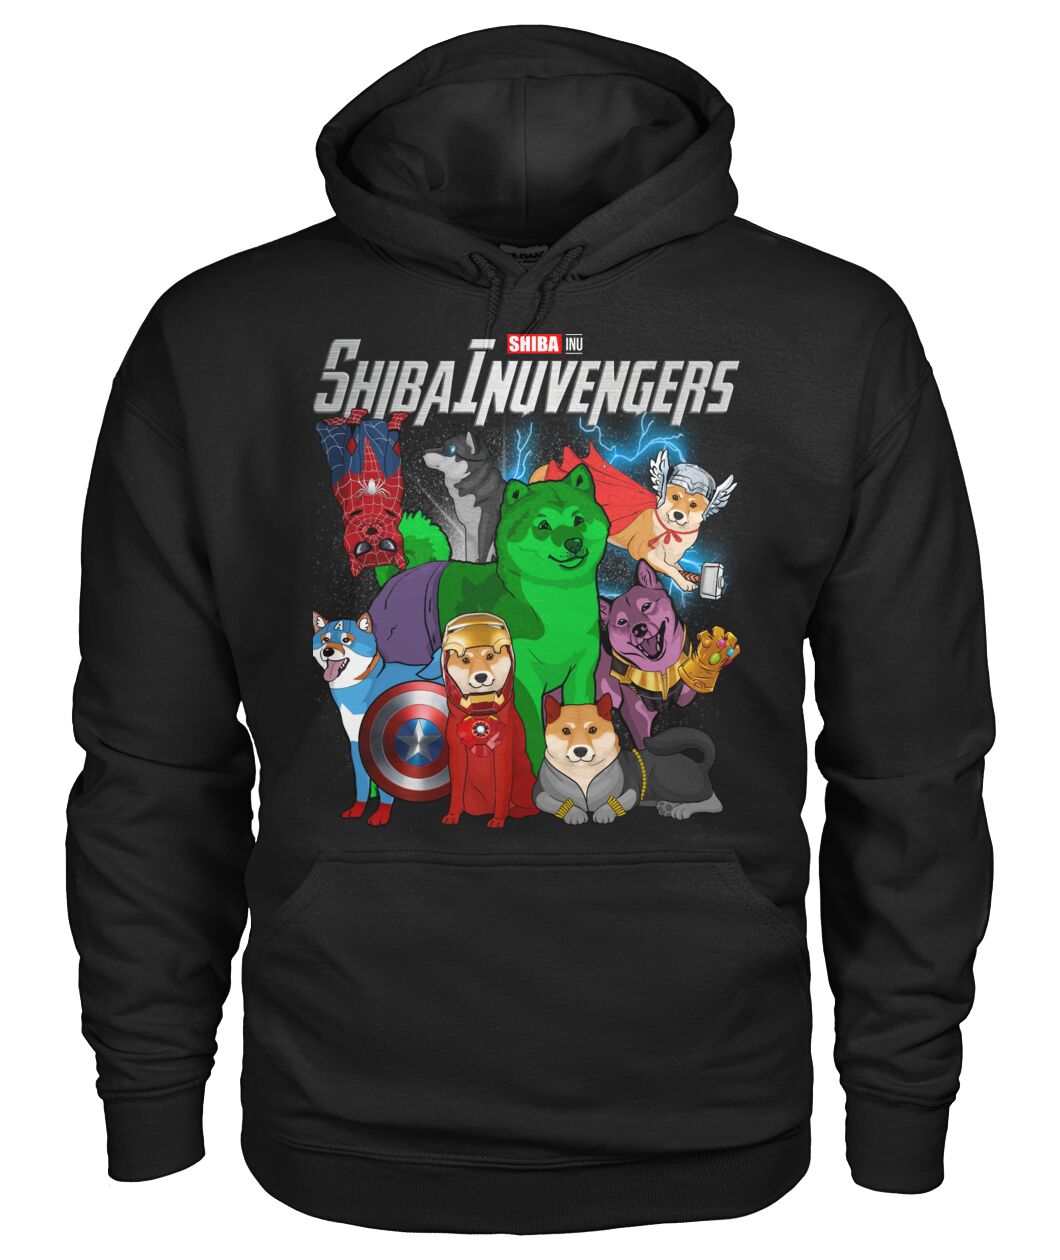 Shiba Inuvengers 3D Hoodie, Shirt 9